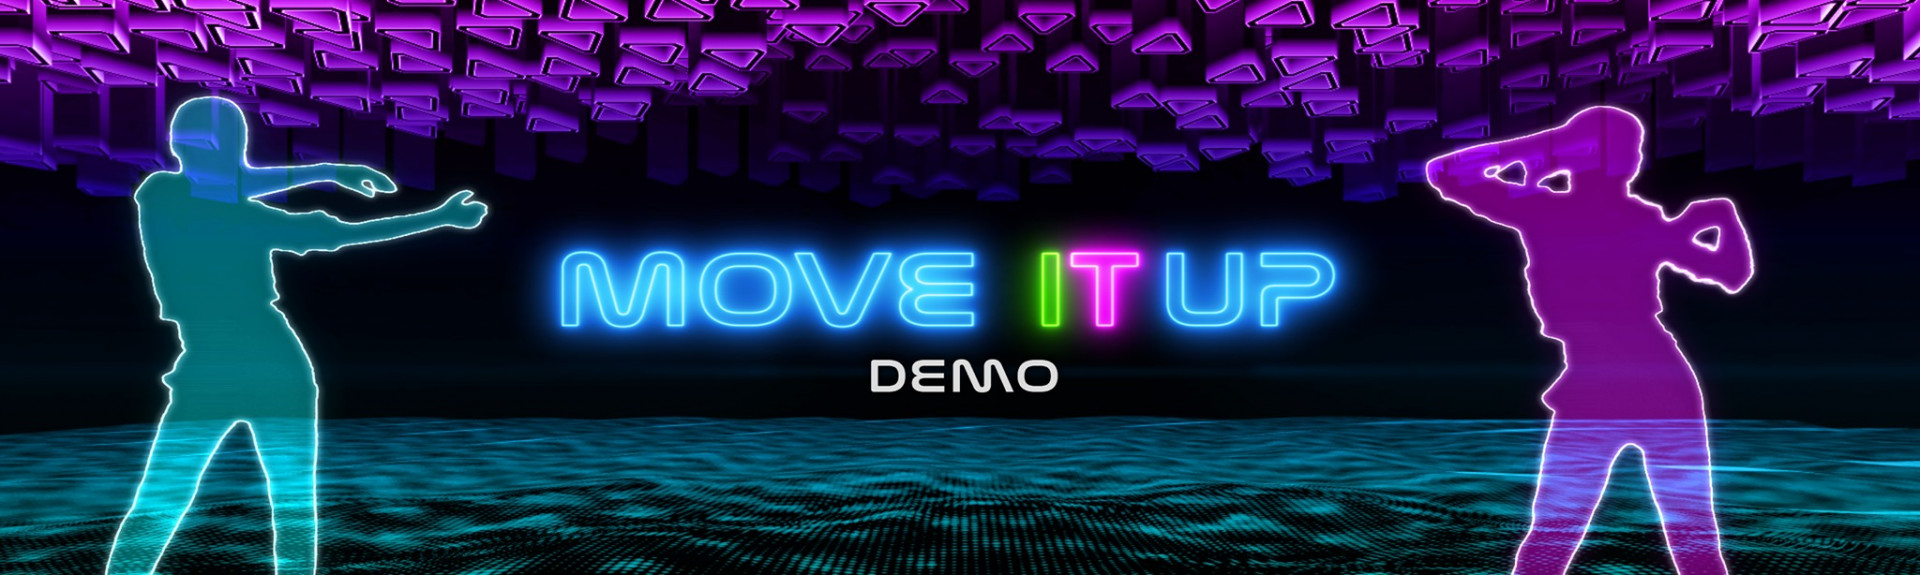 Move It Up Demo